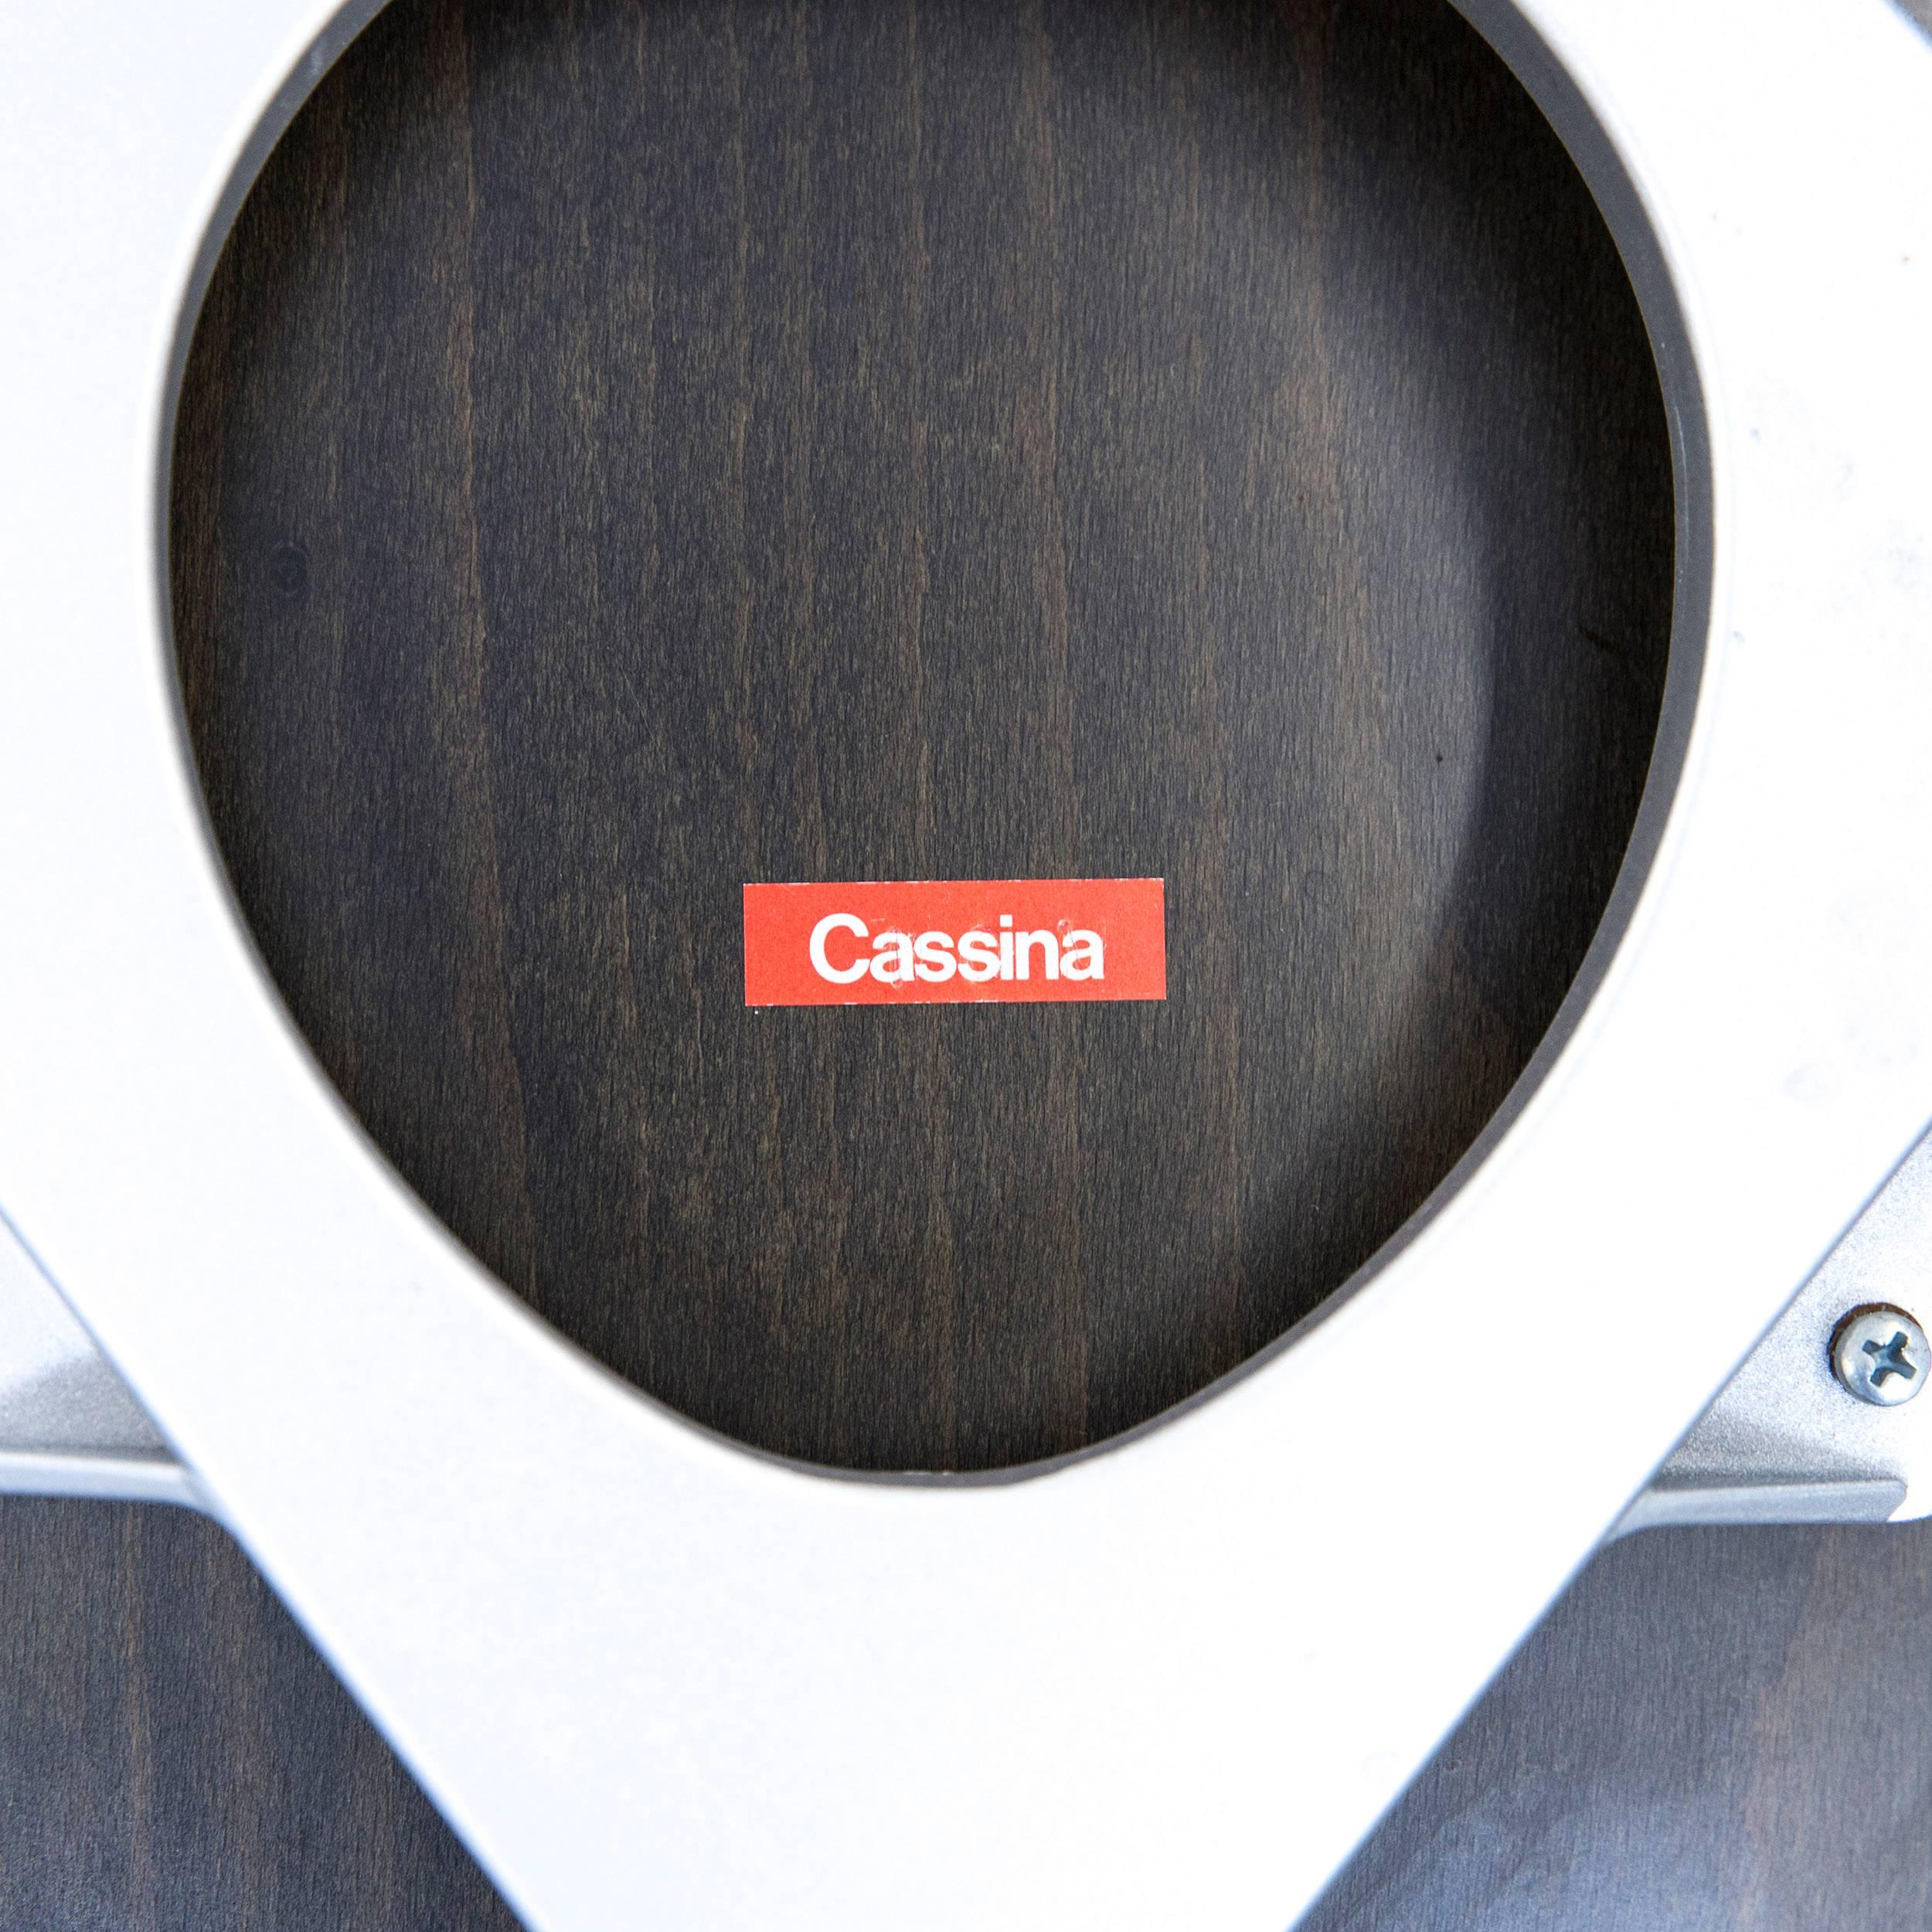 Cassina Revers Andrea Branzi Designer Chair Wood Brown Metal One Seat Modern 1